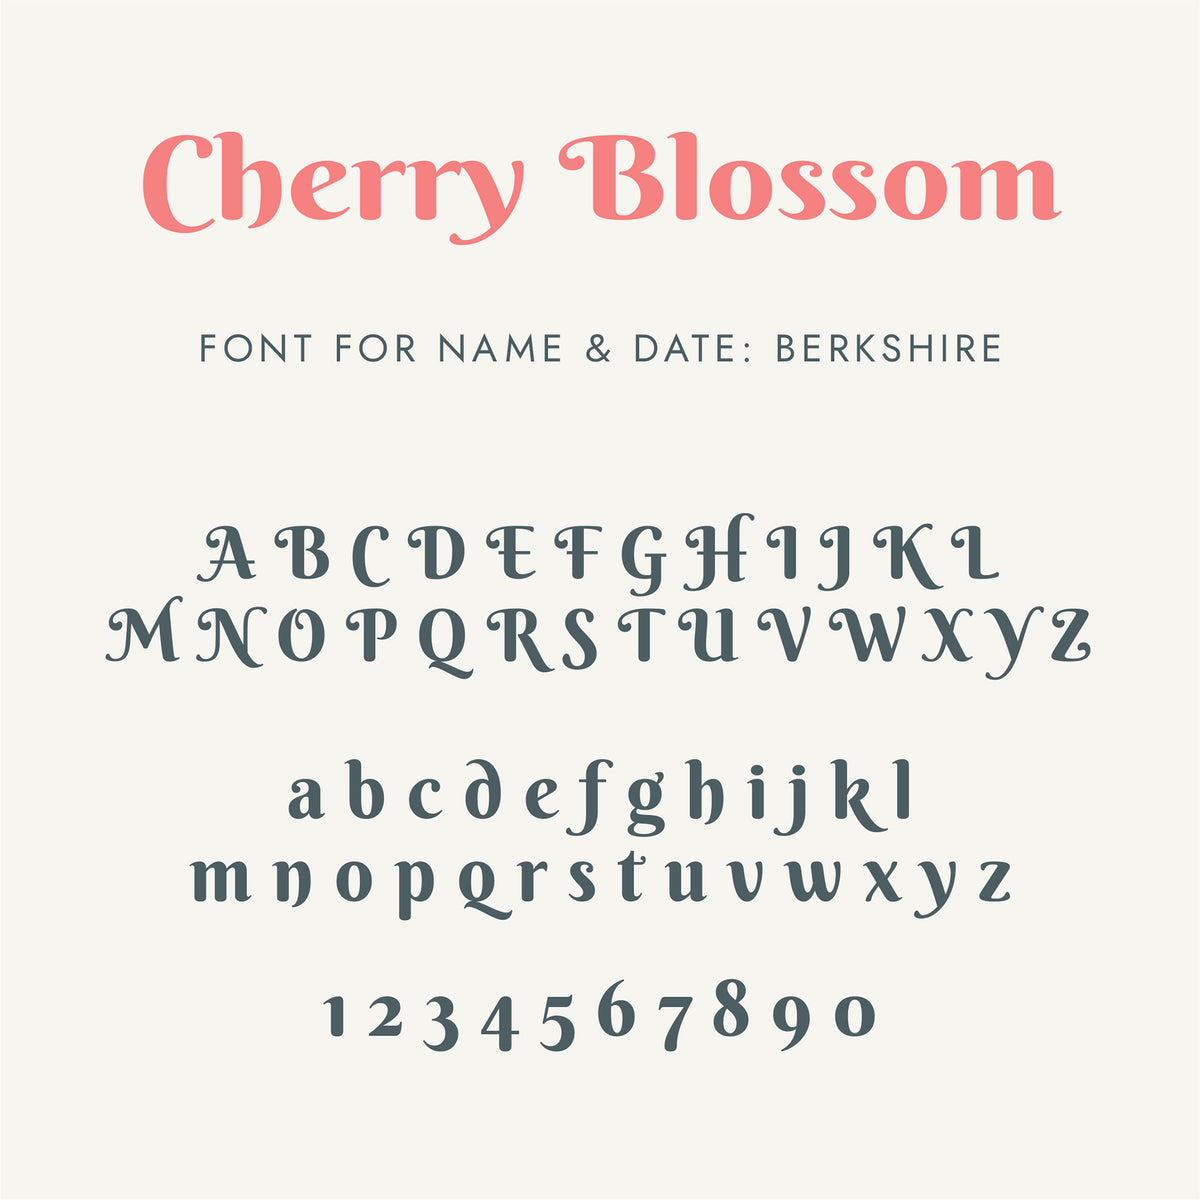 Personalized Anniversary Journal Cherry Blossom